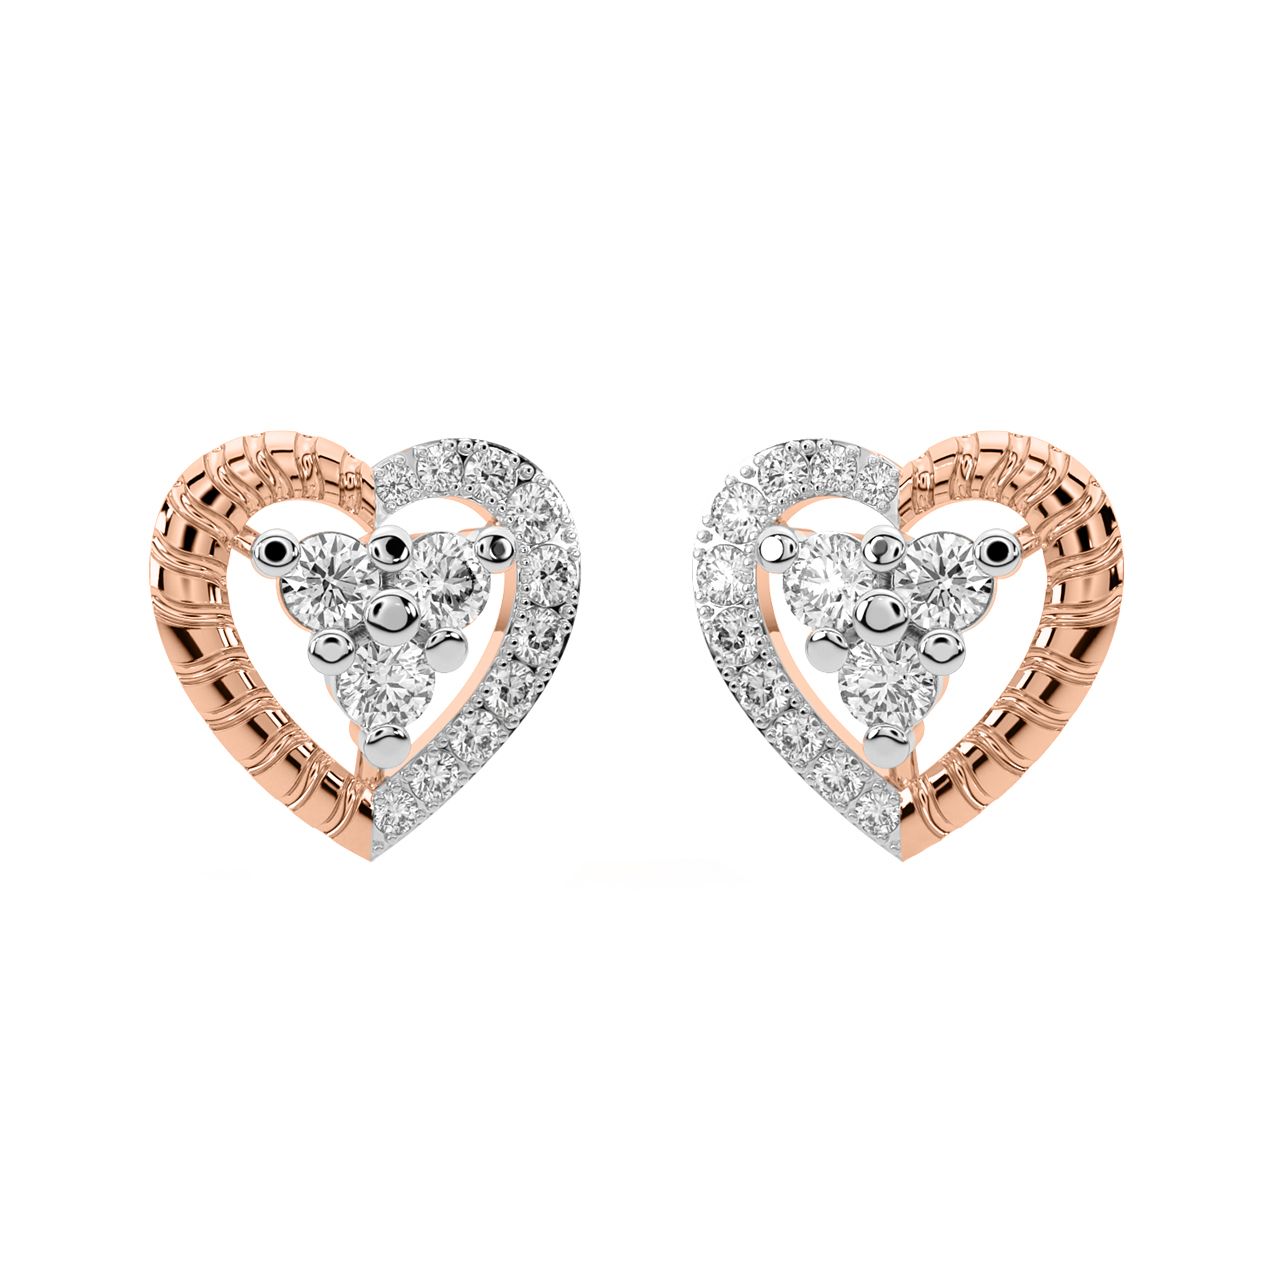 Heart Design Diamond Stud Earrings